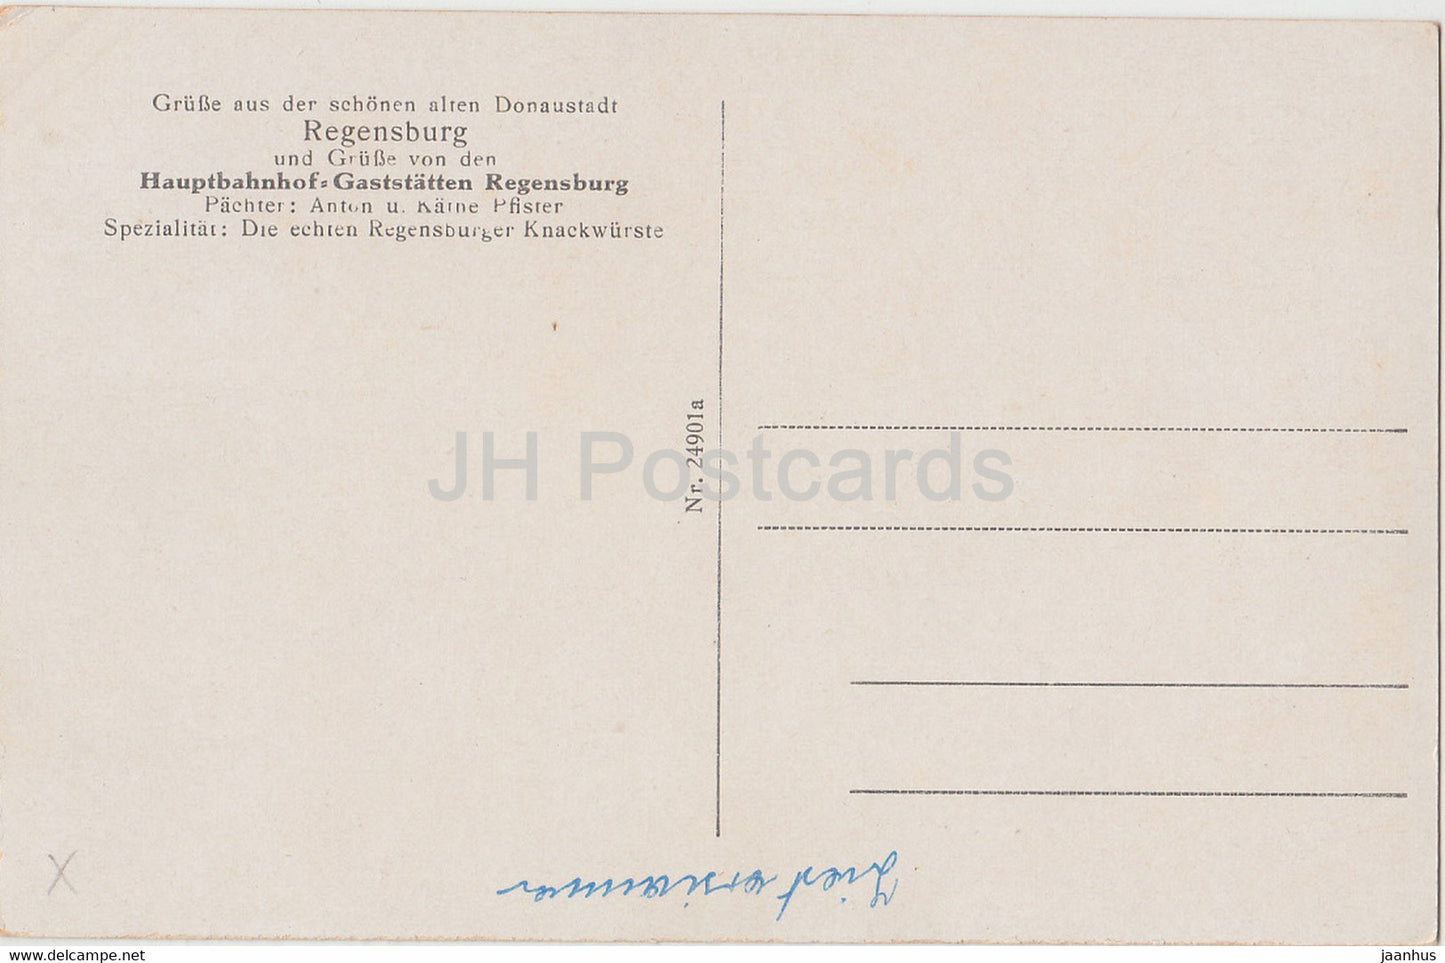 Grusse aus Donaustadt Regensburg - Walhalla - Brucktor - Dom - 24901 - carte postale ancienne - Allemagne - inutilisée